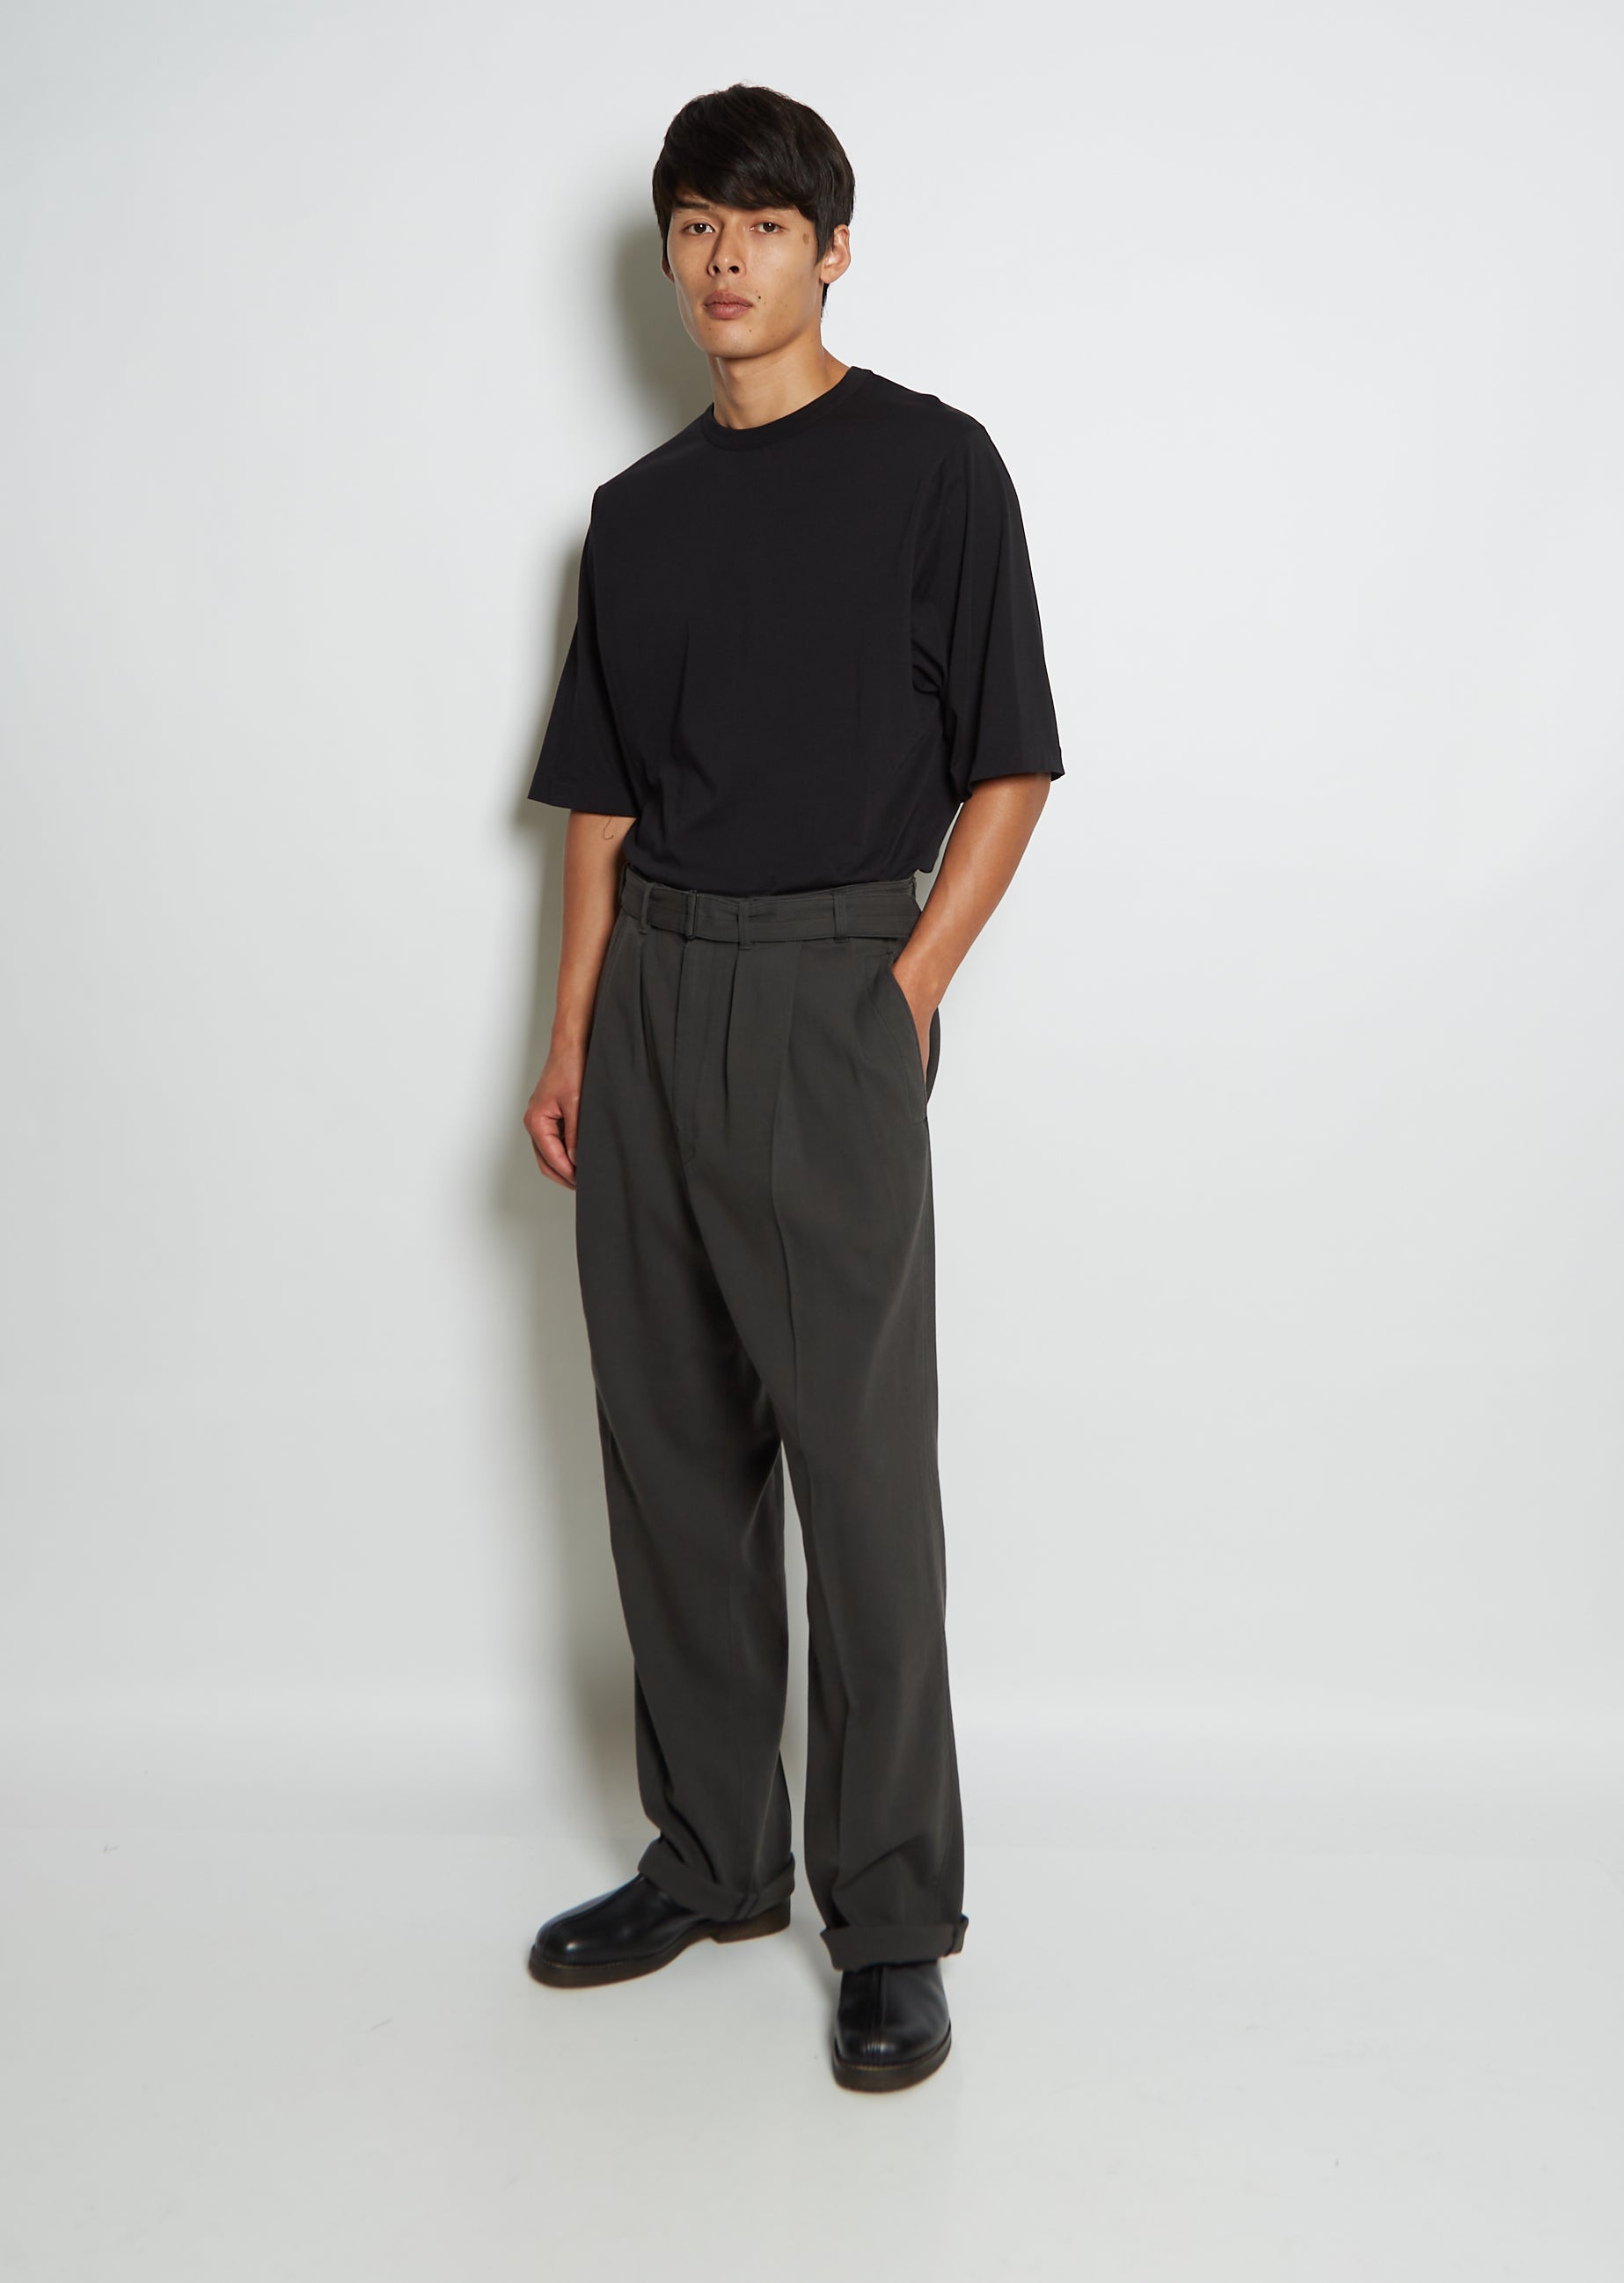 Stylish and comfortable pants for men | Anerkjendt